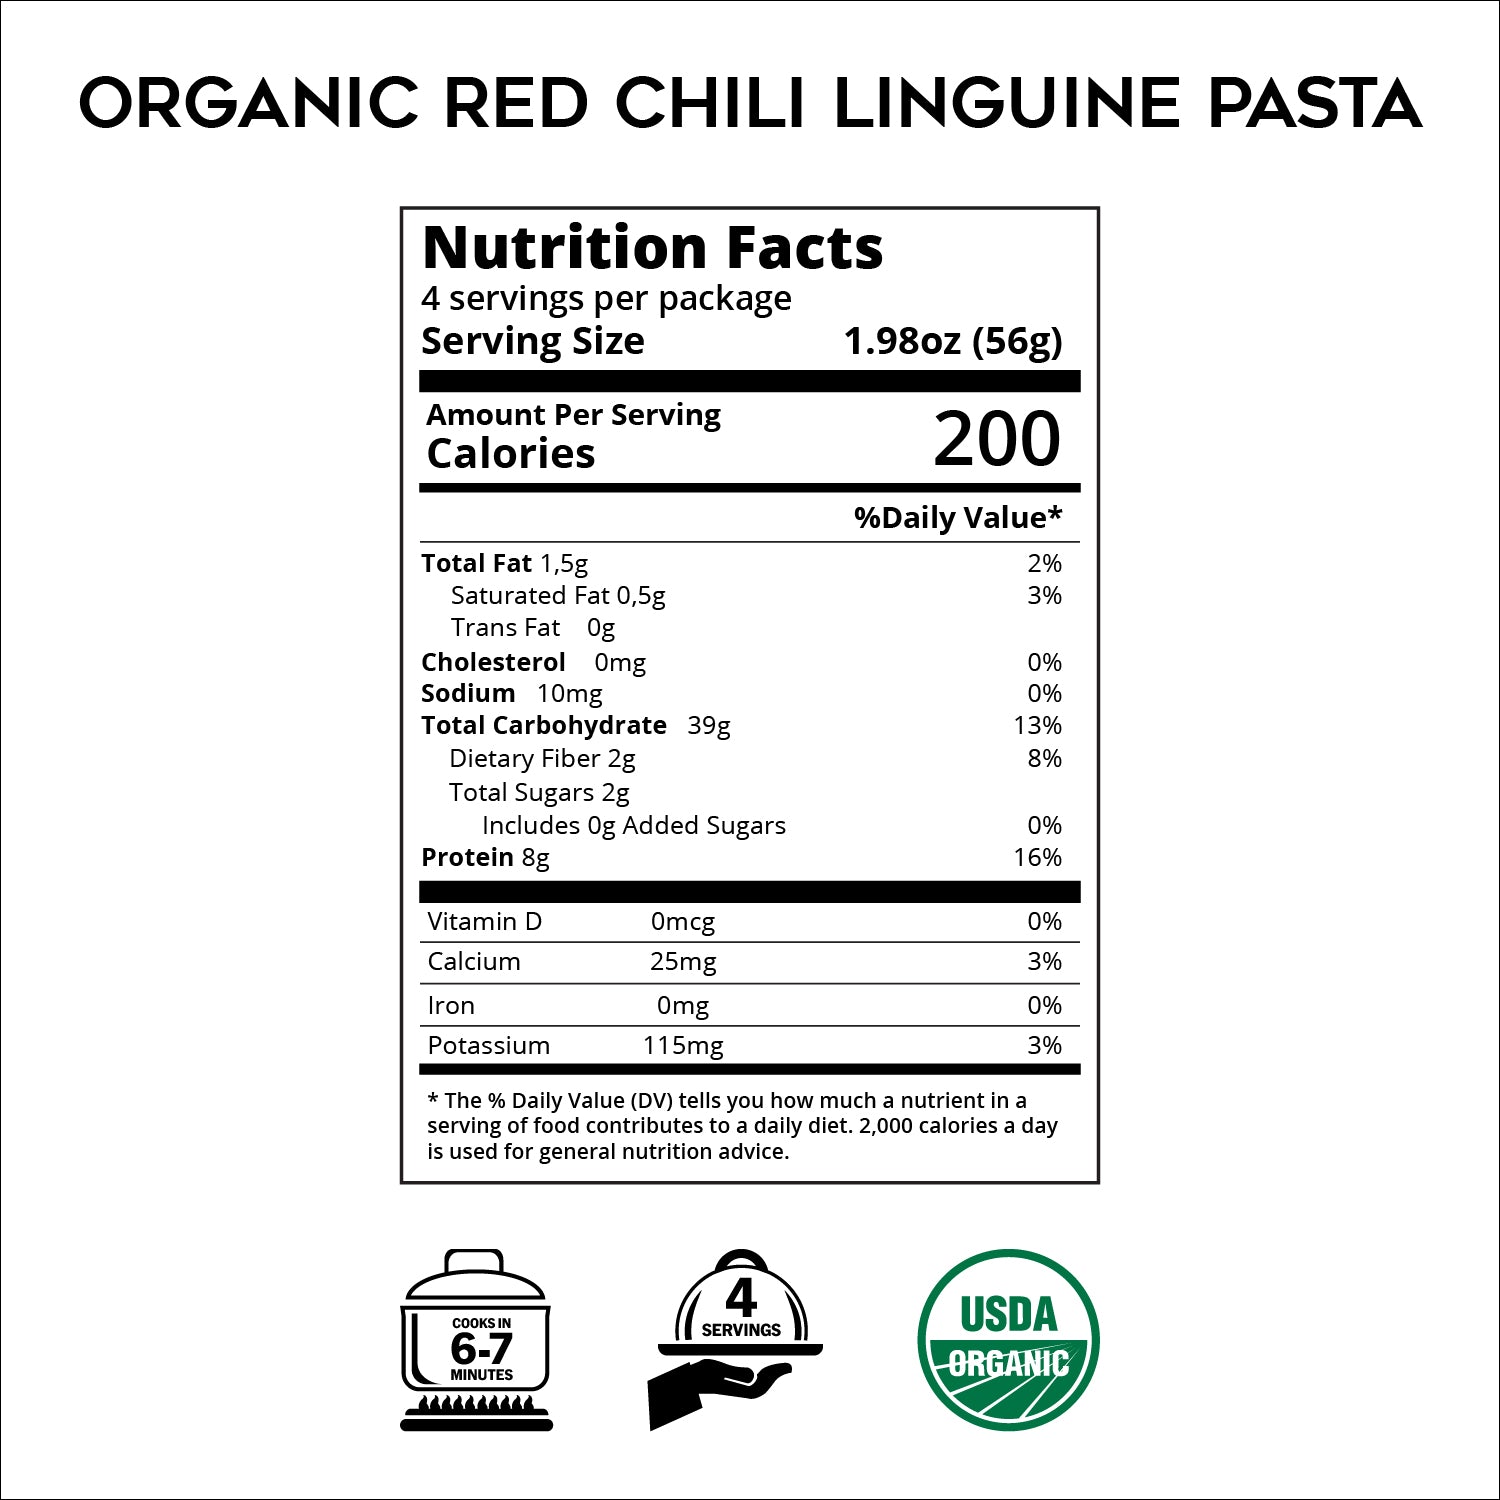 Organic red chili linguine pasta